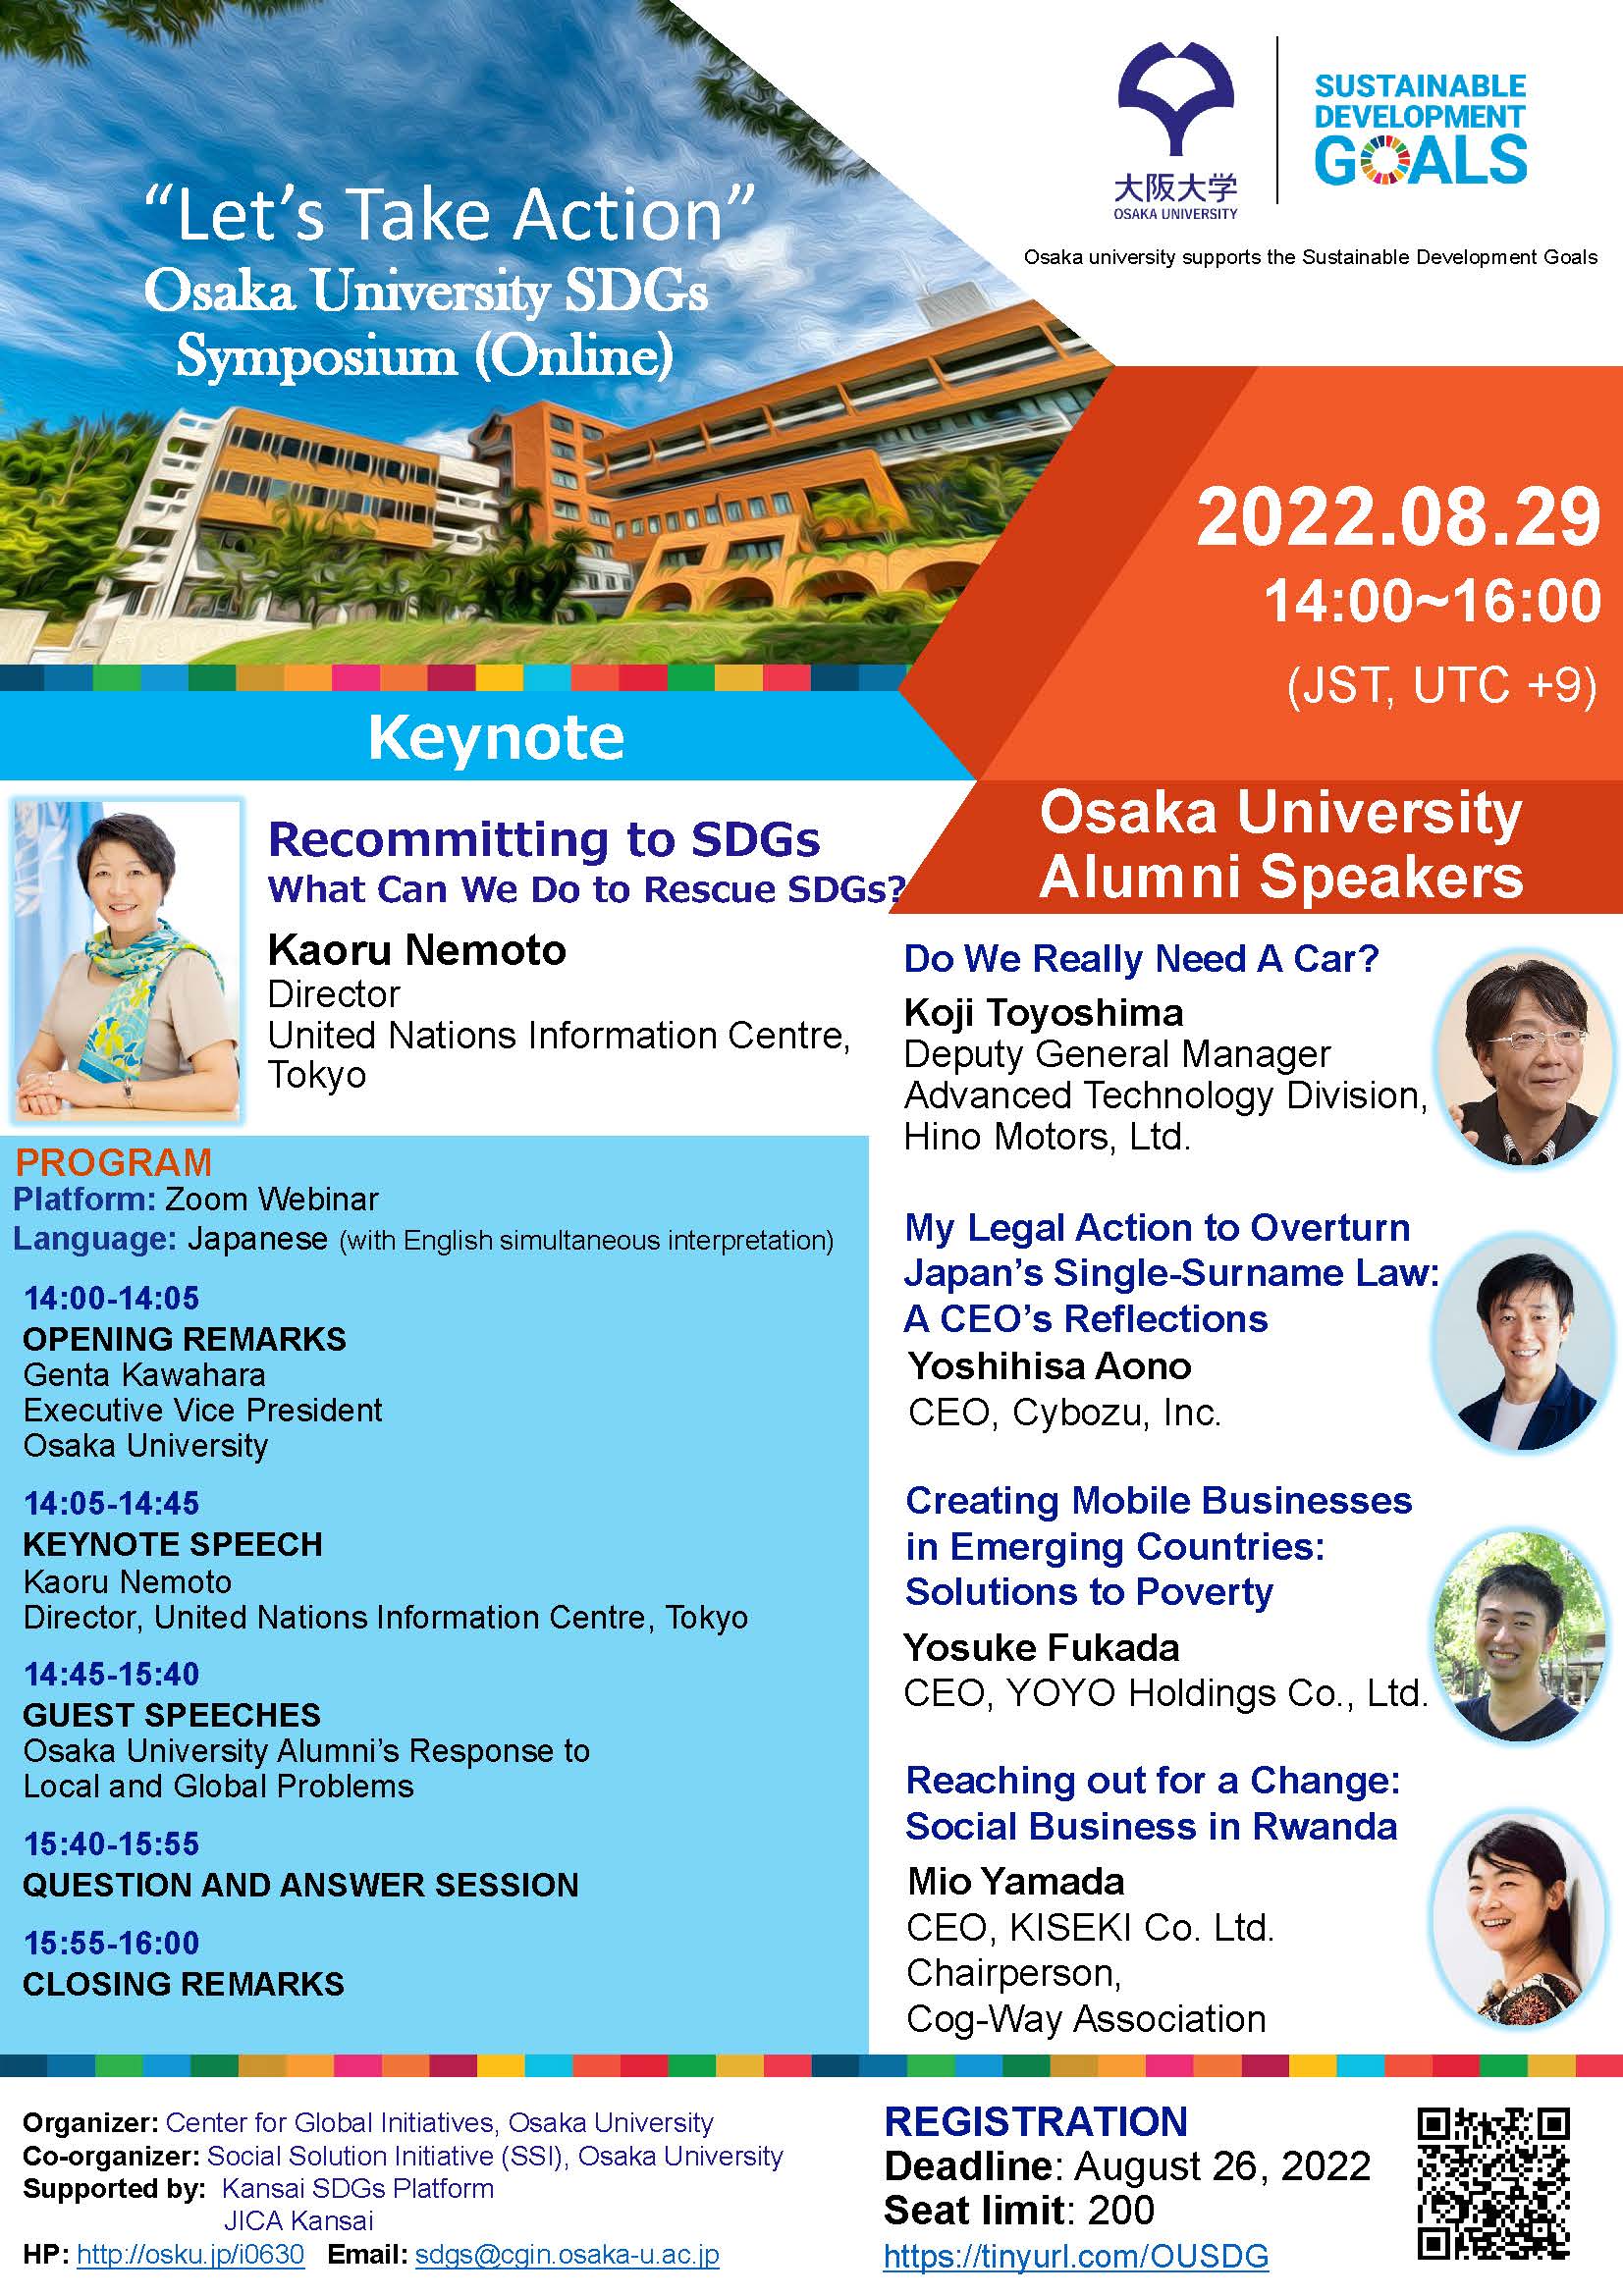 "Let's Take Action" - Osaka University SDGs Symposium (Online)